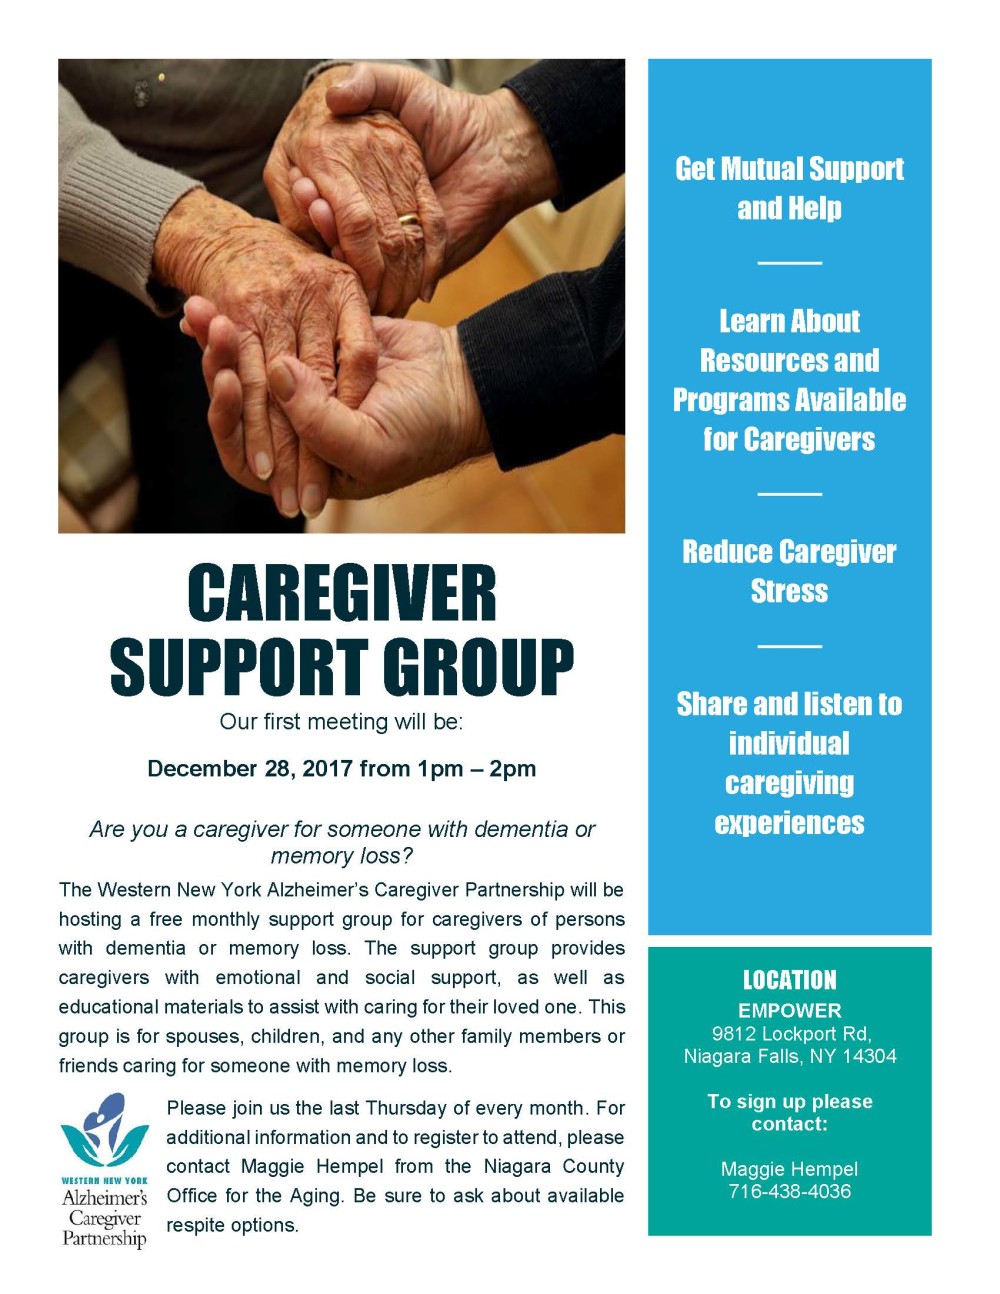 Caregiver support group